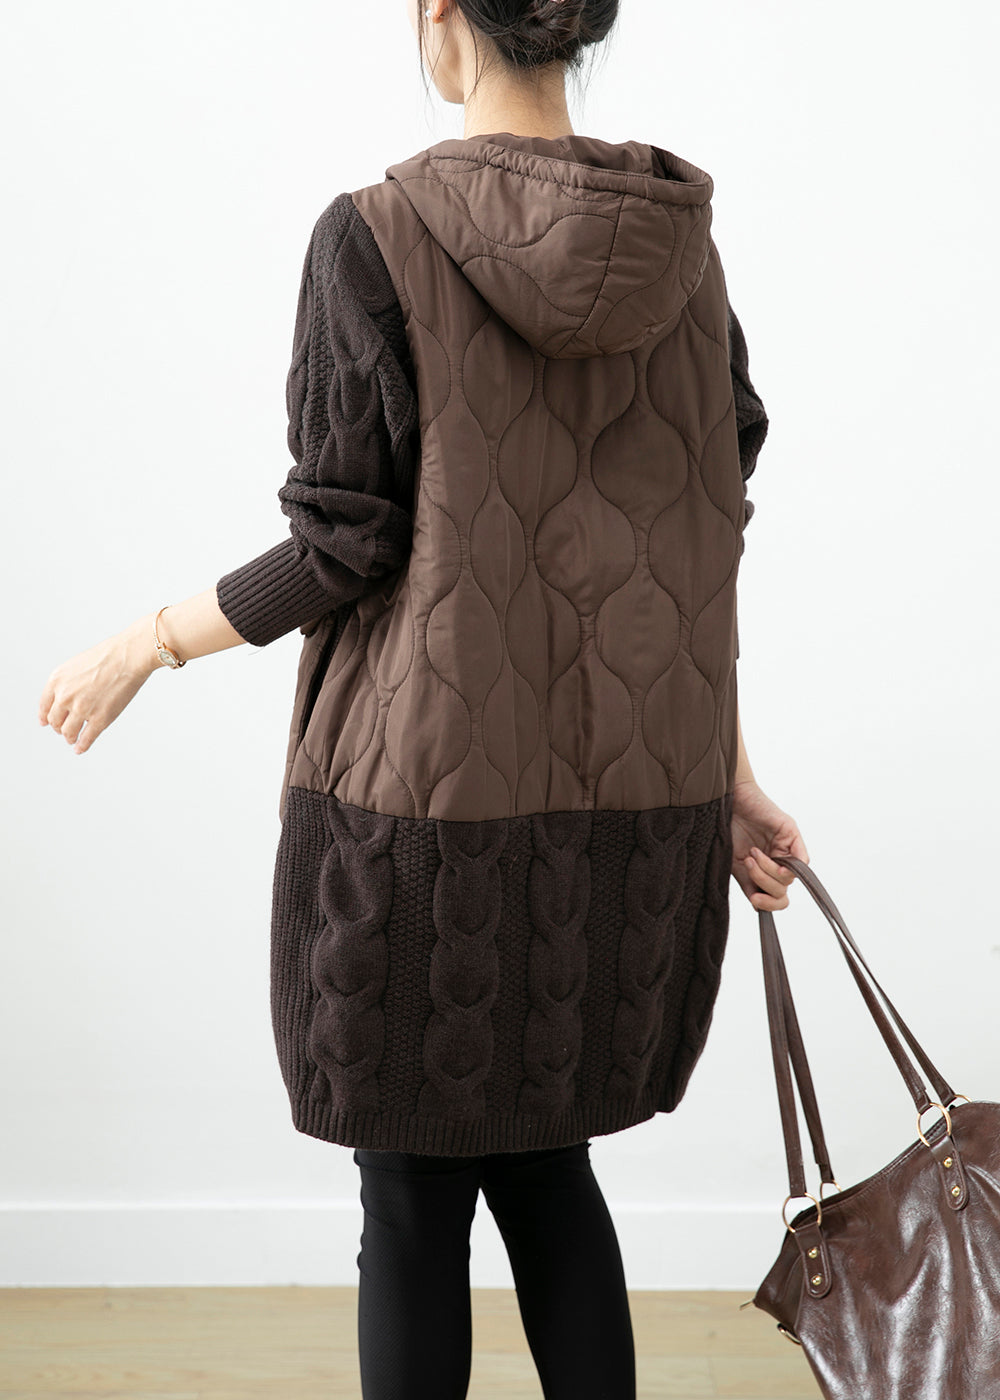 Chocolate Patchwork Knit Warm Fleece Pullover Sweatshirt Dress Hooded Pockets Winter